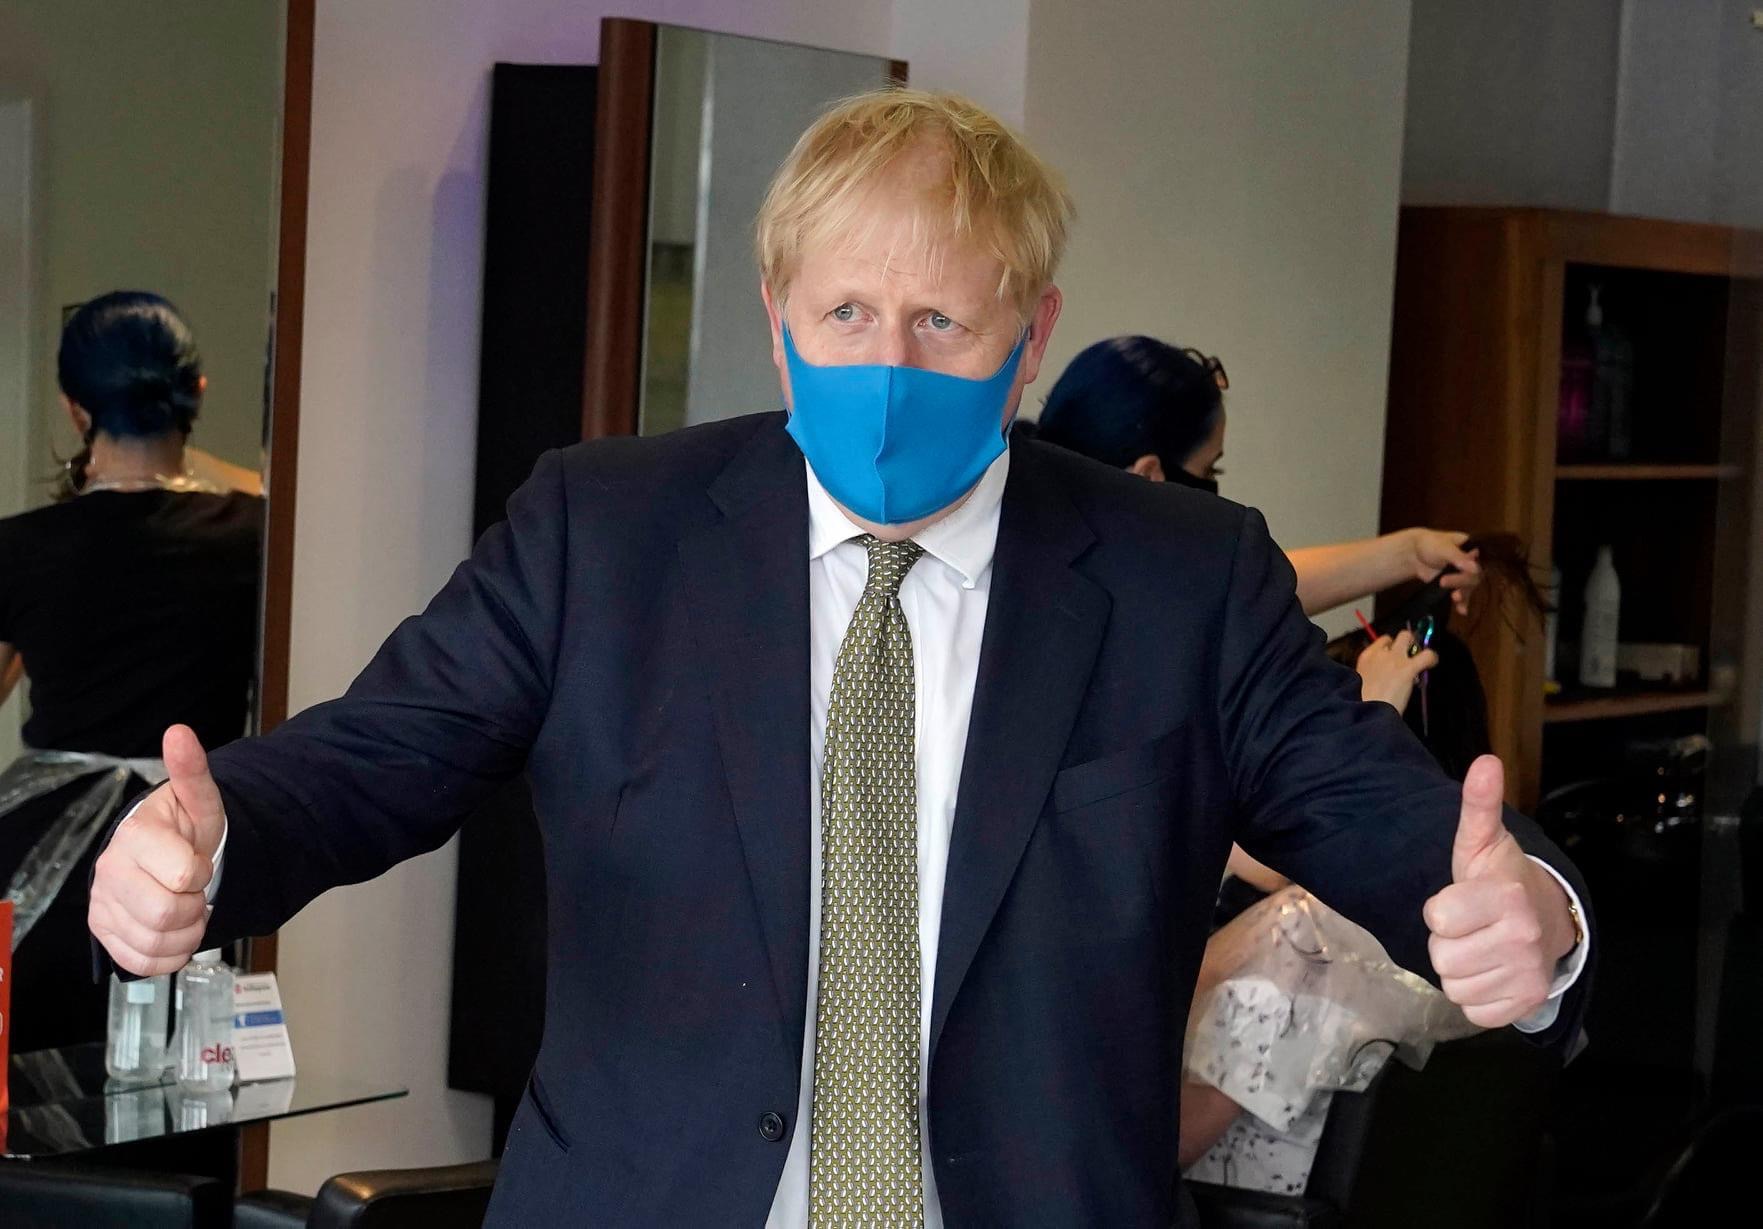 NEWS | Boris Johnson has urged public to wear face masks in shops